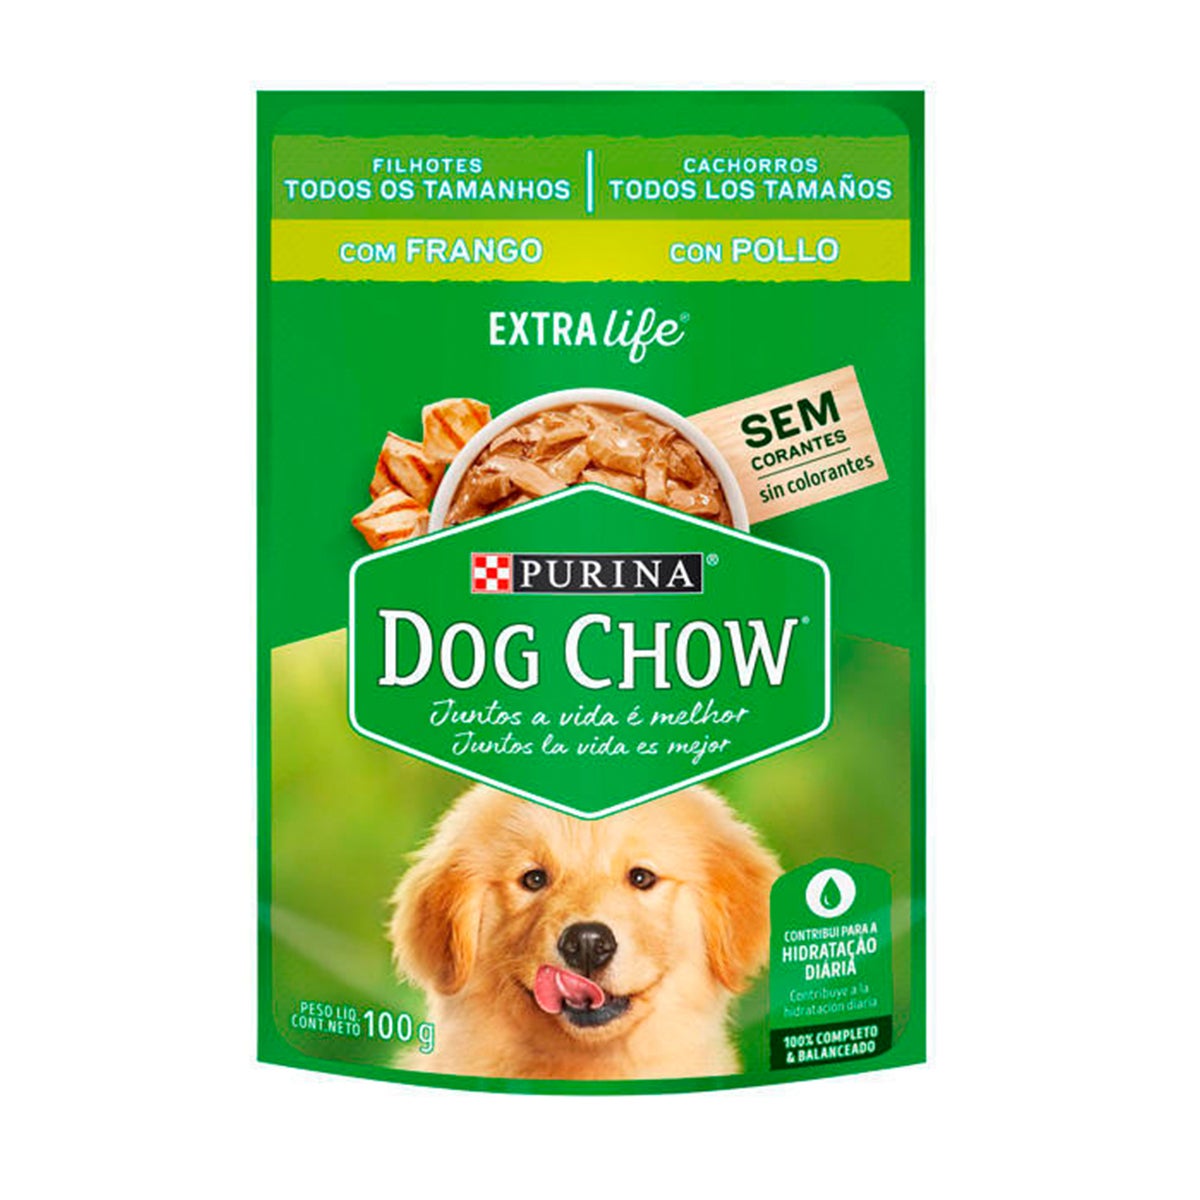 dog-chow-cachorros-pollo-todos-los-tama%C3%B1os.jpg